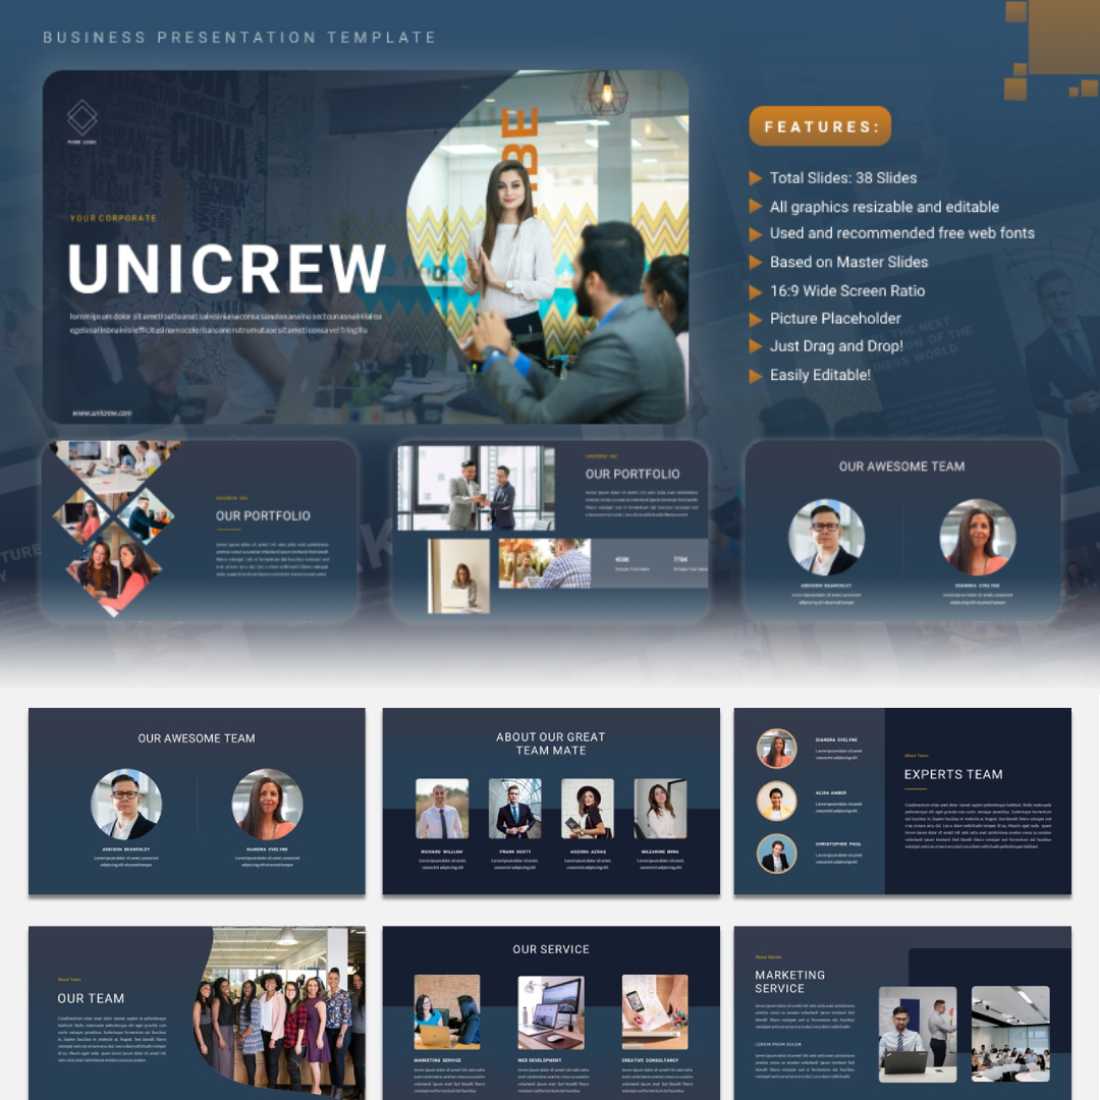 Unicrew - Business Multipurpose Google Slides Presentation Template cover image.